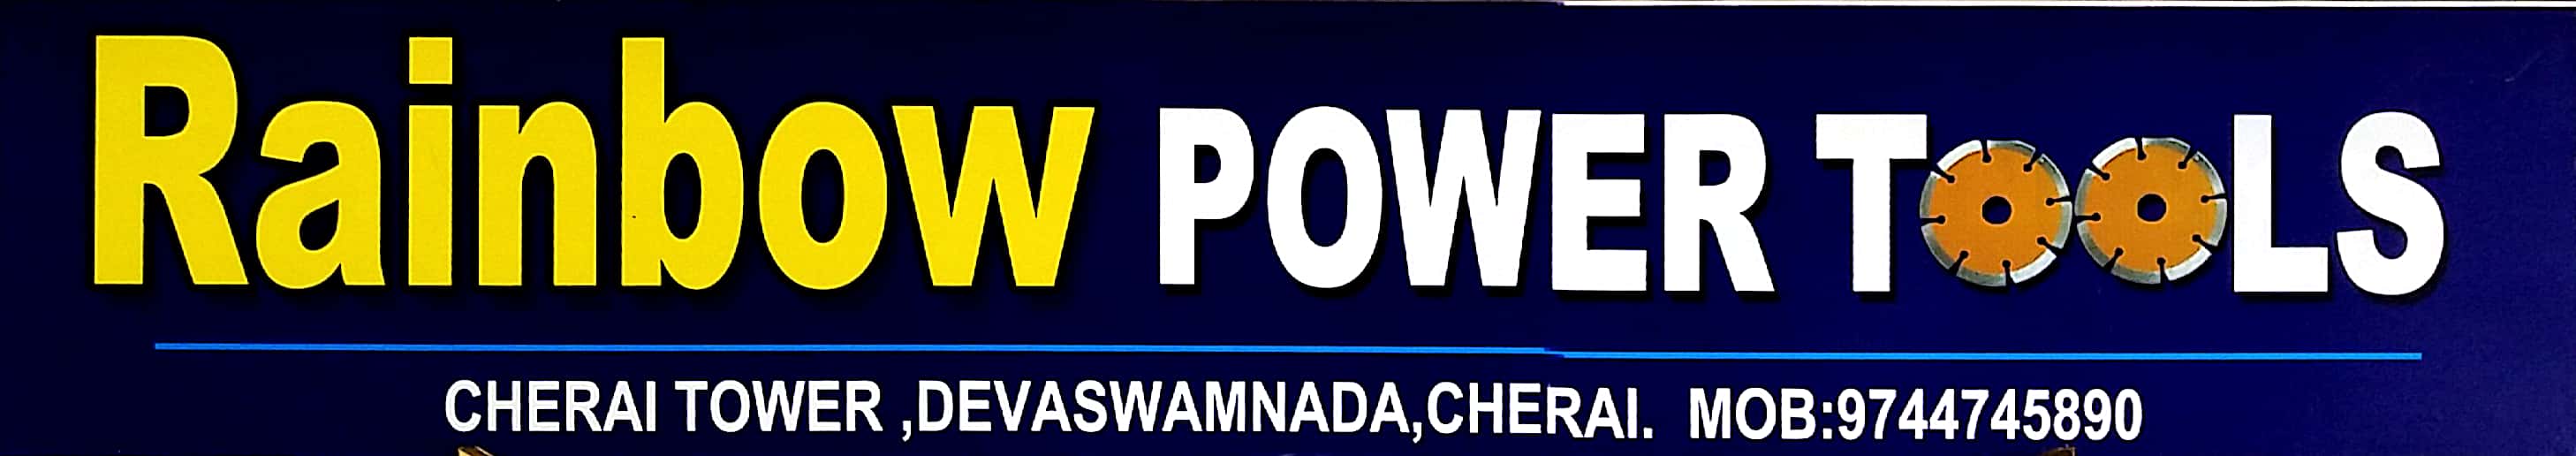 RAINBOW POWER TOOLS, HARDWARE SHOP,  service in Cherai, Ernakulam